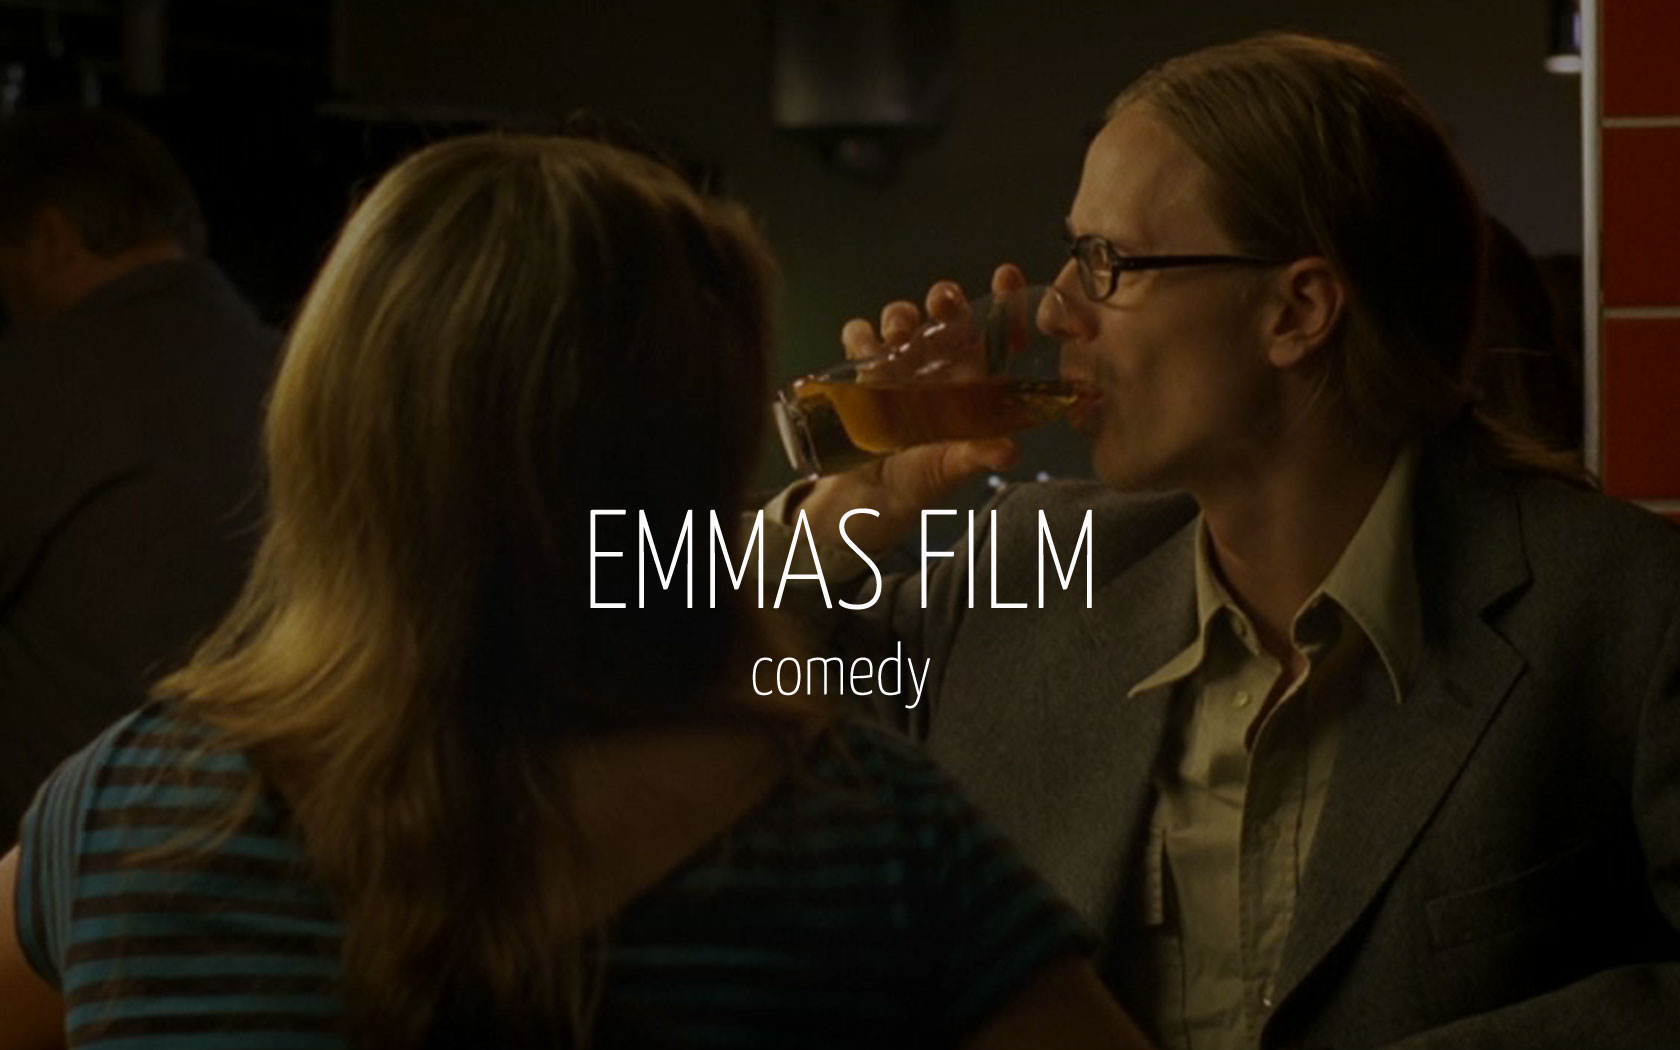 Scandinavian actor Fredrik Wagner as world of warcraft nerd in comedy film Emmas film